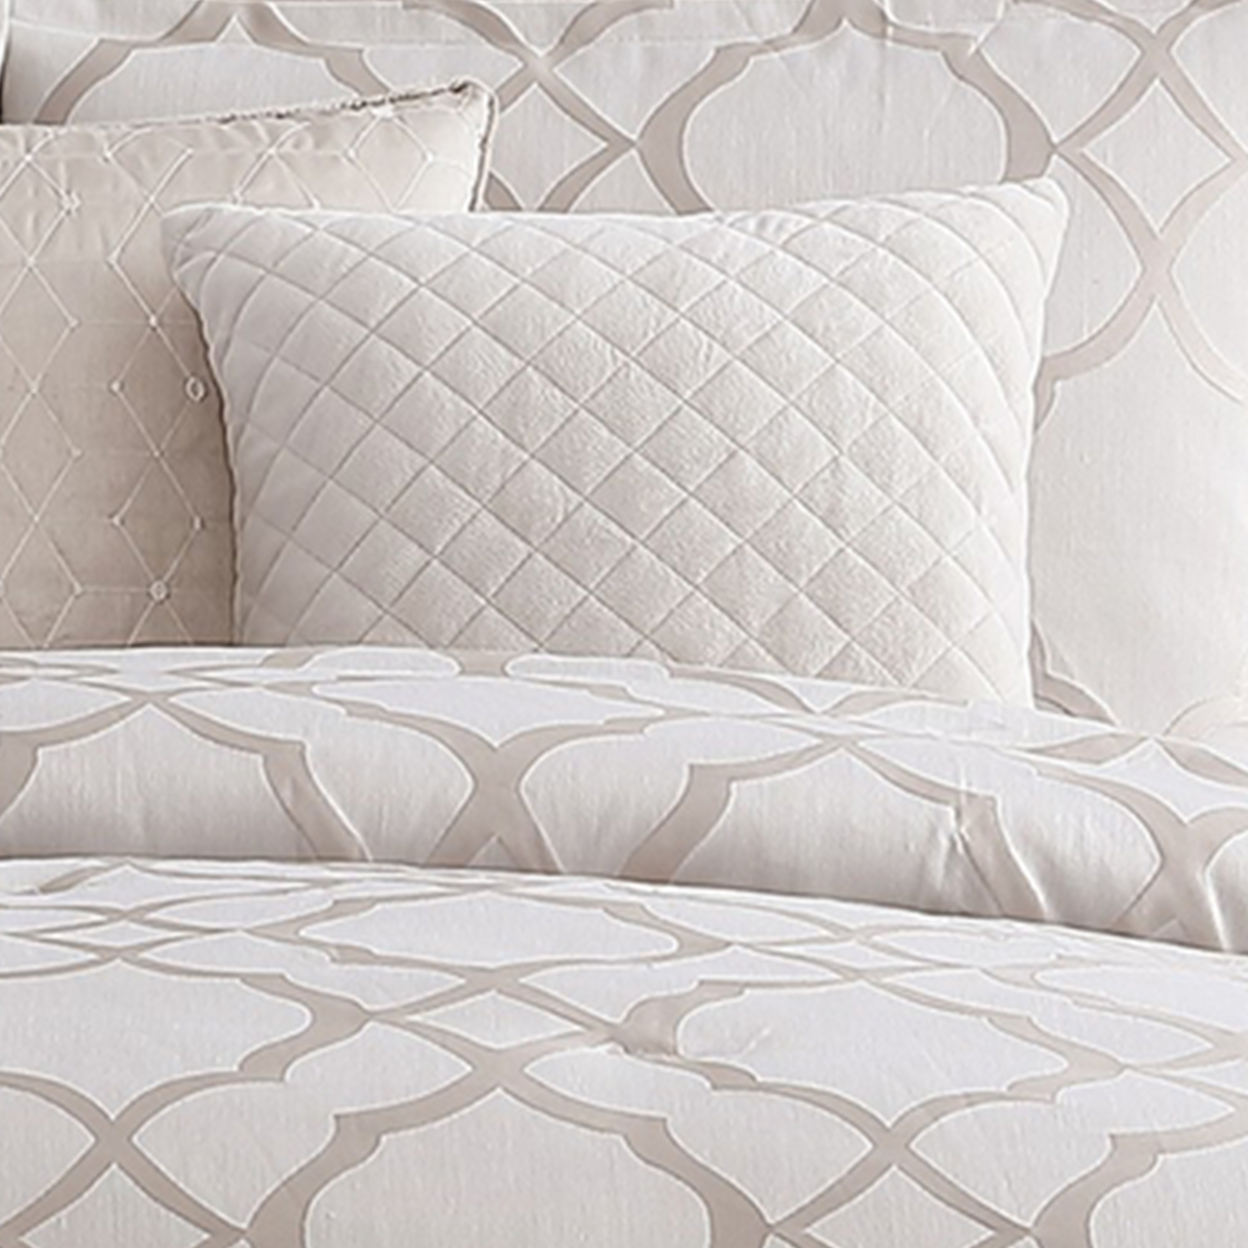 9 Piece Queen Size Fabric Comforter Set With Quatrefoil Prints, White- Saltoro Sherpi